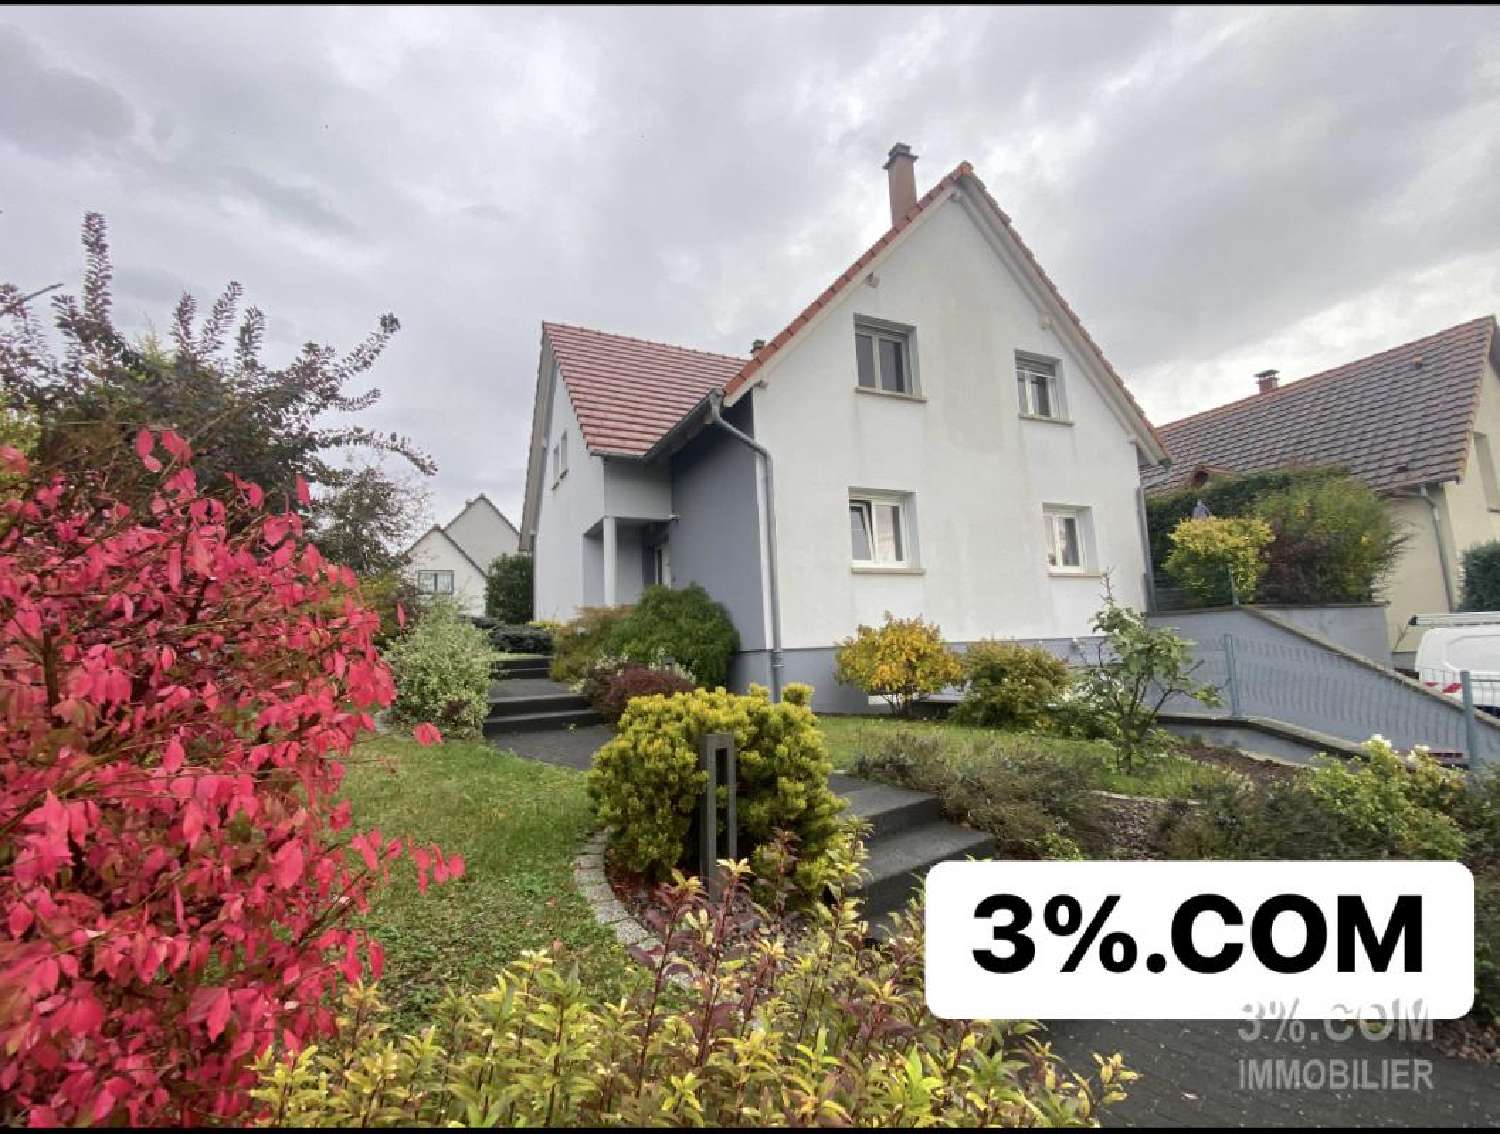  à vendre maison Wittersheim Bas-Rhin 1